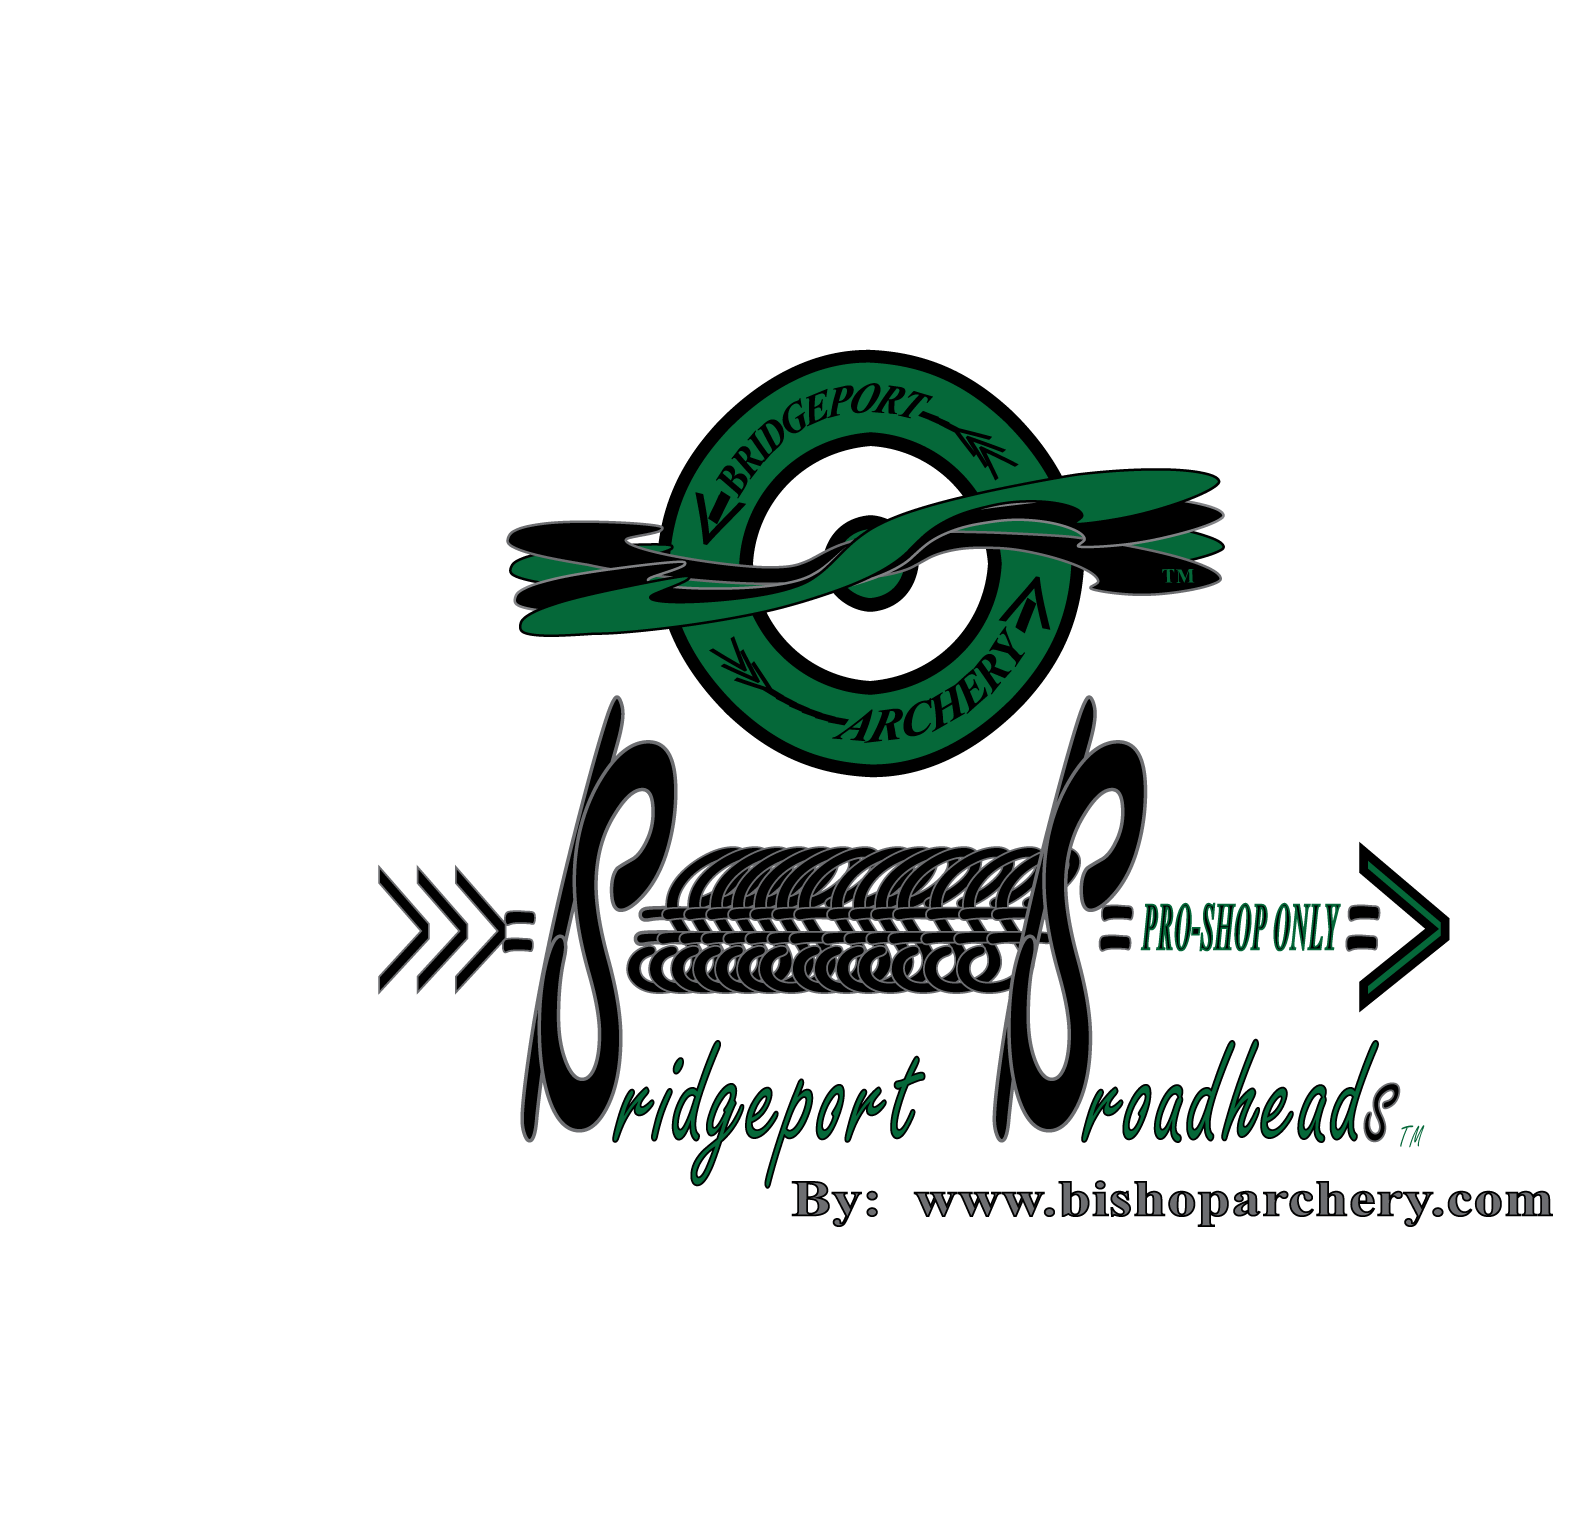 06242016-bridgeport-archery-broadheads-ssssss-logo-by-bishop-60.png